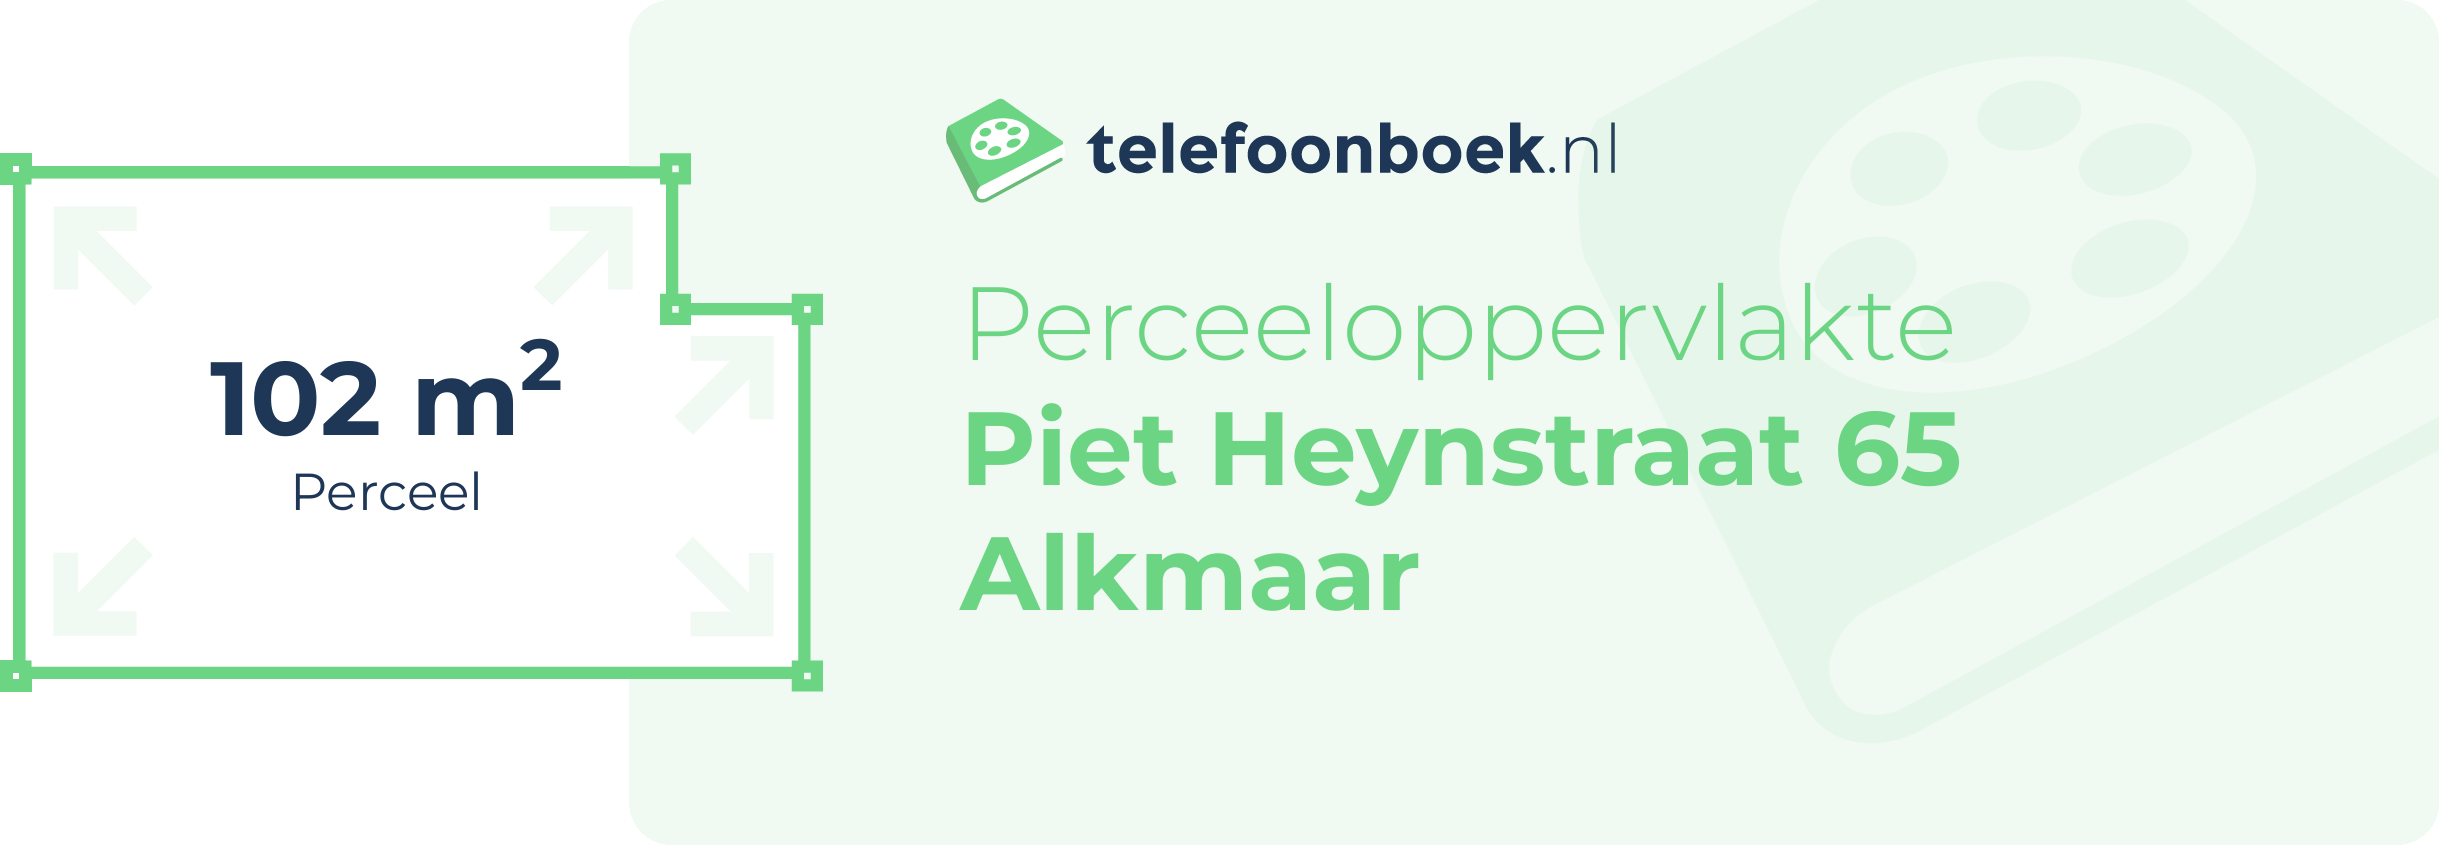 Perceeloppervlakte Piet Heynstraat 65 Alkmaar